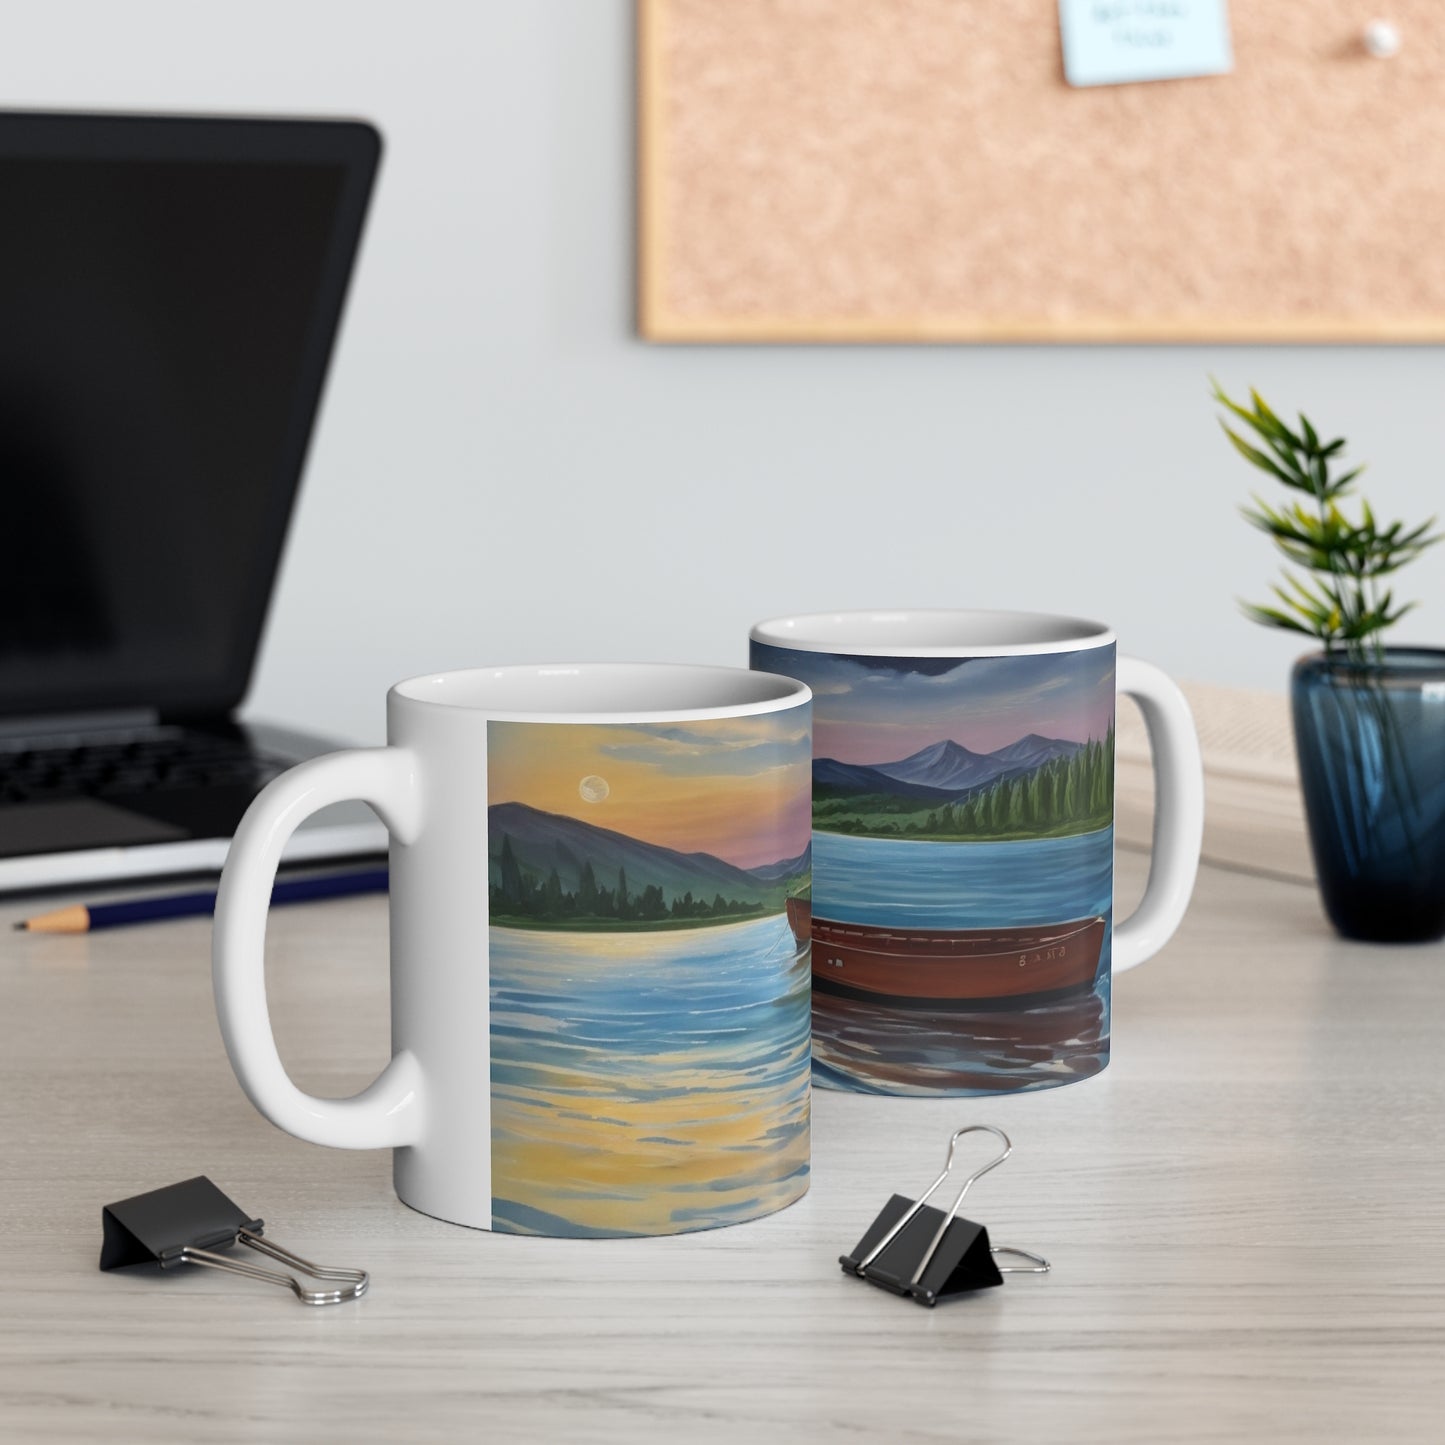 Boat on Lake Mug - Ceramic Coffee Mug 11oz